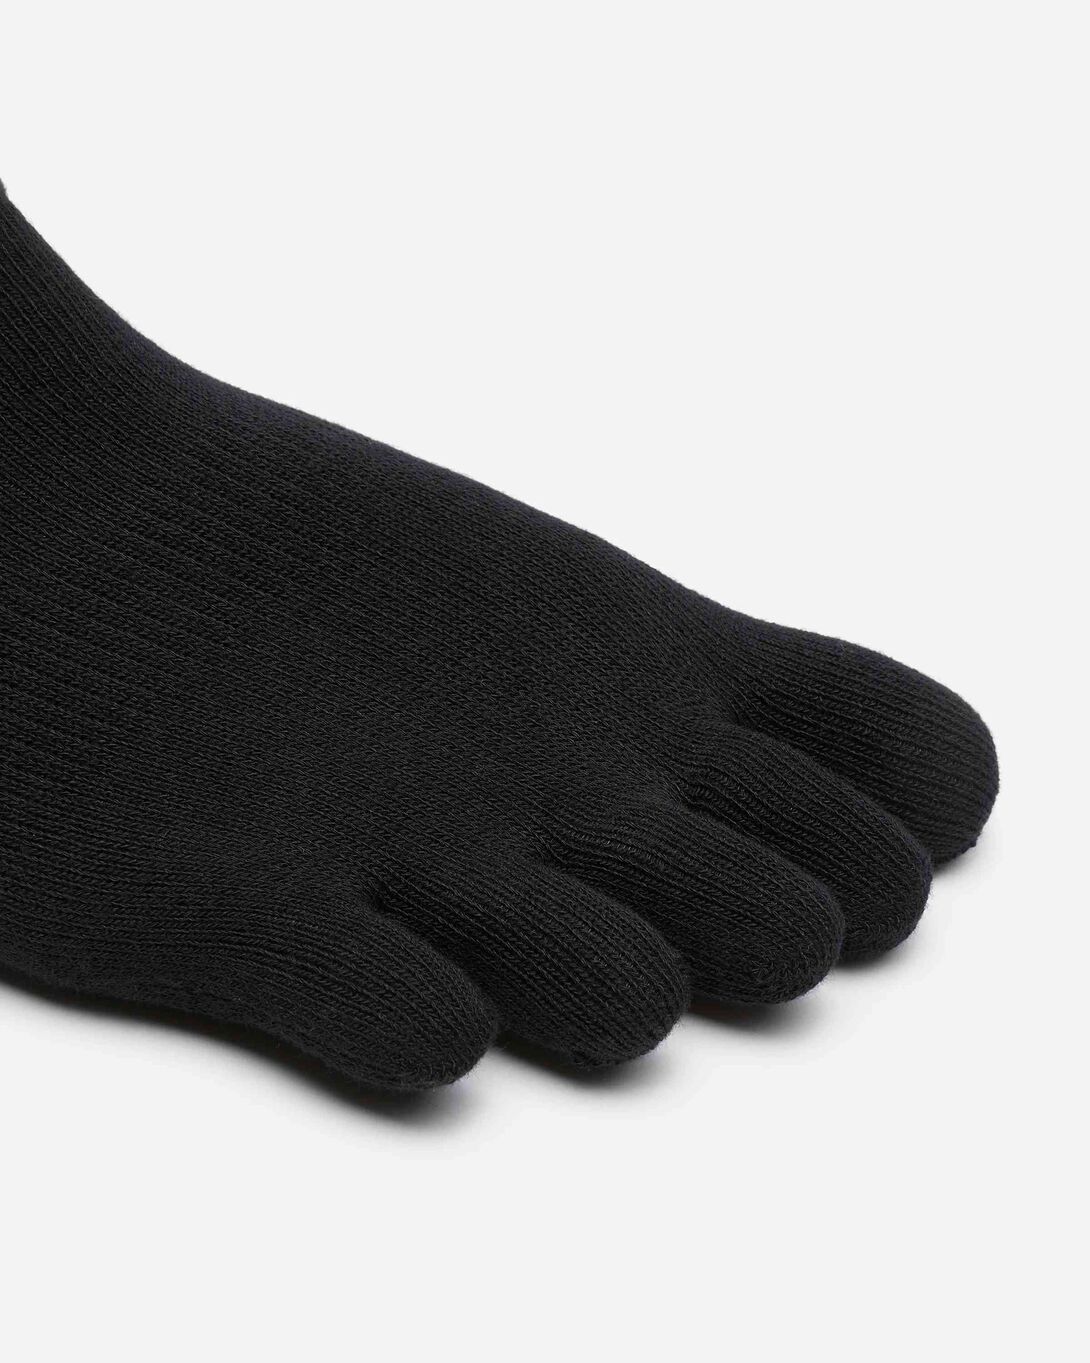 TikMox Toe Socks Crew Five Finger Socks 6Pairs